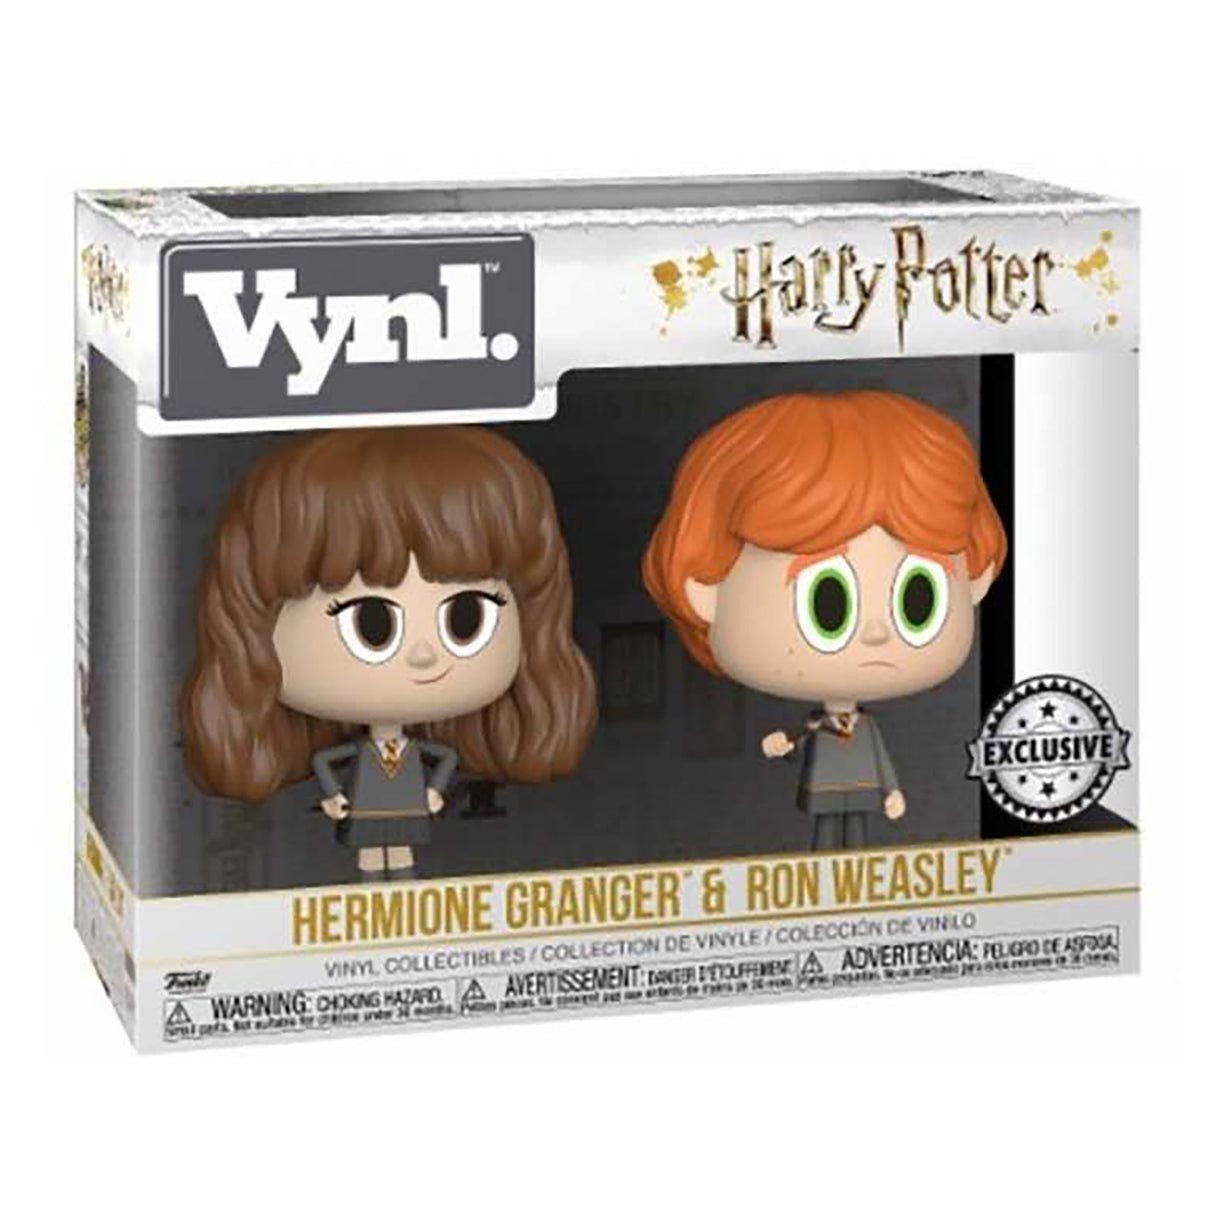 Funko Harry Potter - Ron Weasley with Broken Wand and Hermione Granger Vinyl Figure Set